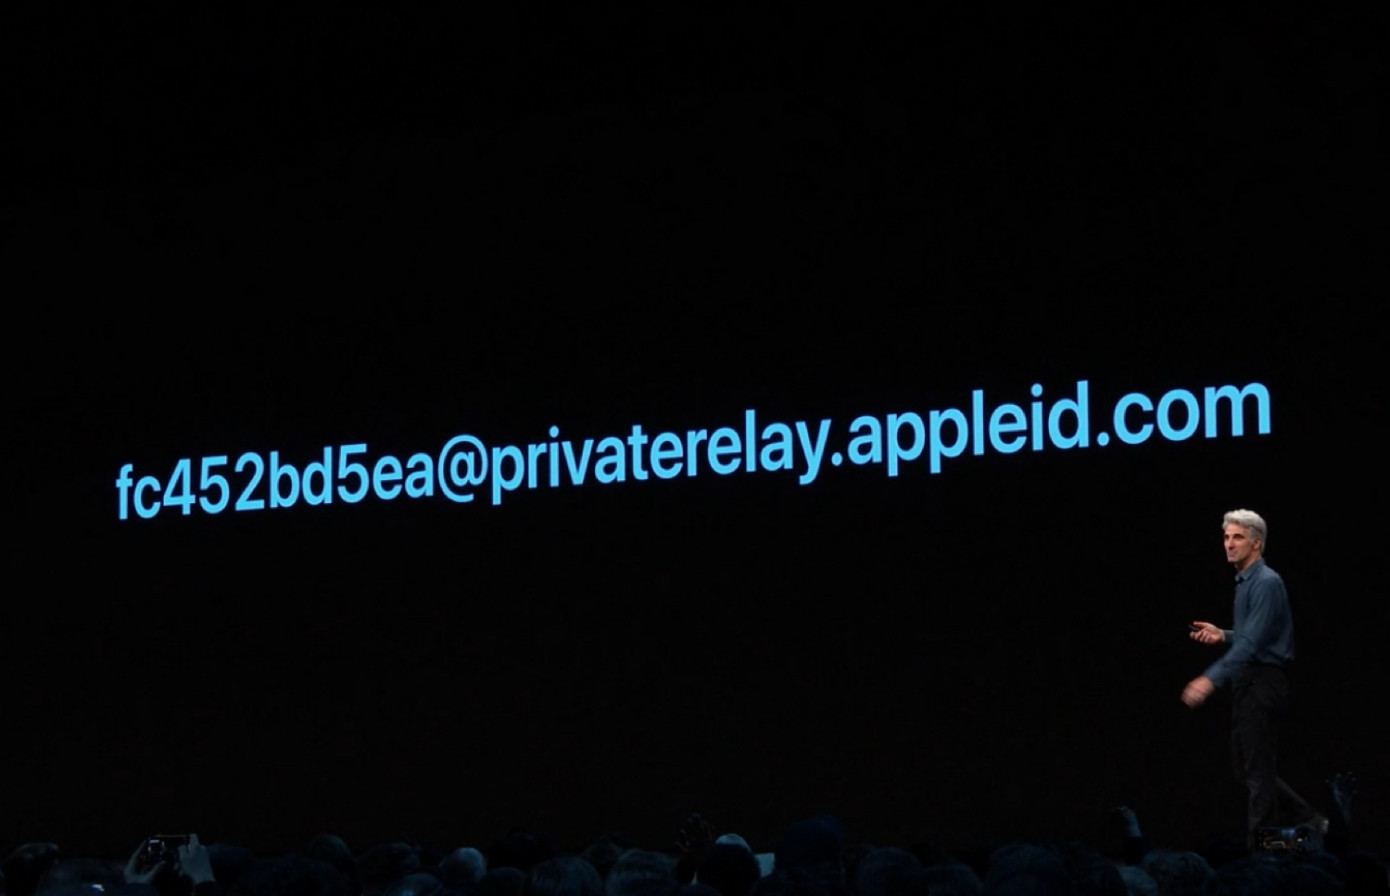 apple relay address announcement